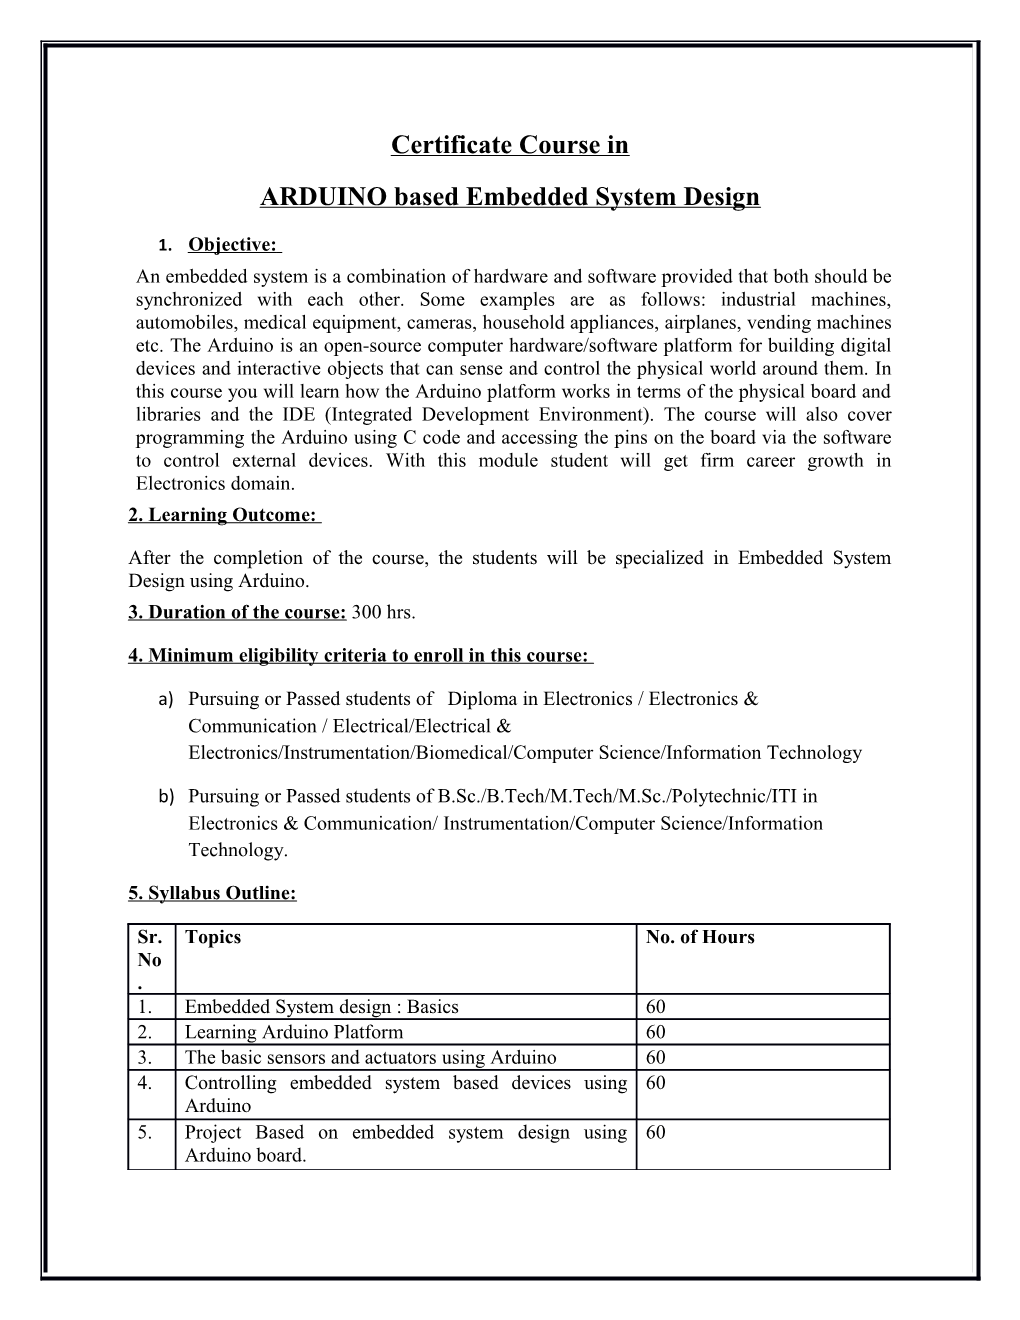 ARDUINO Based Embedded System Design